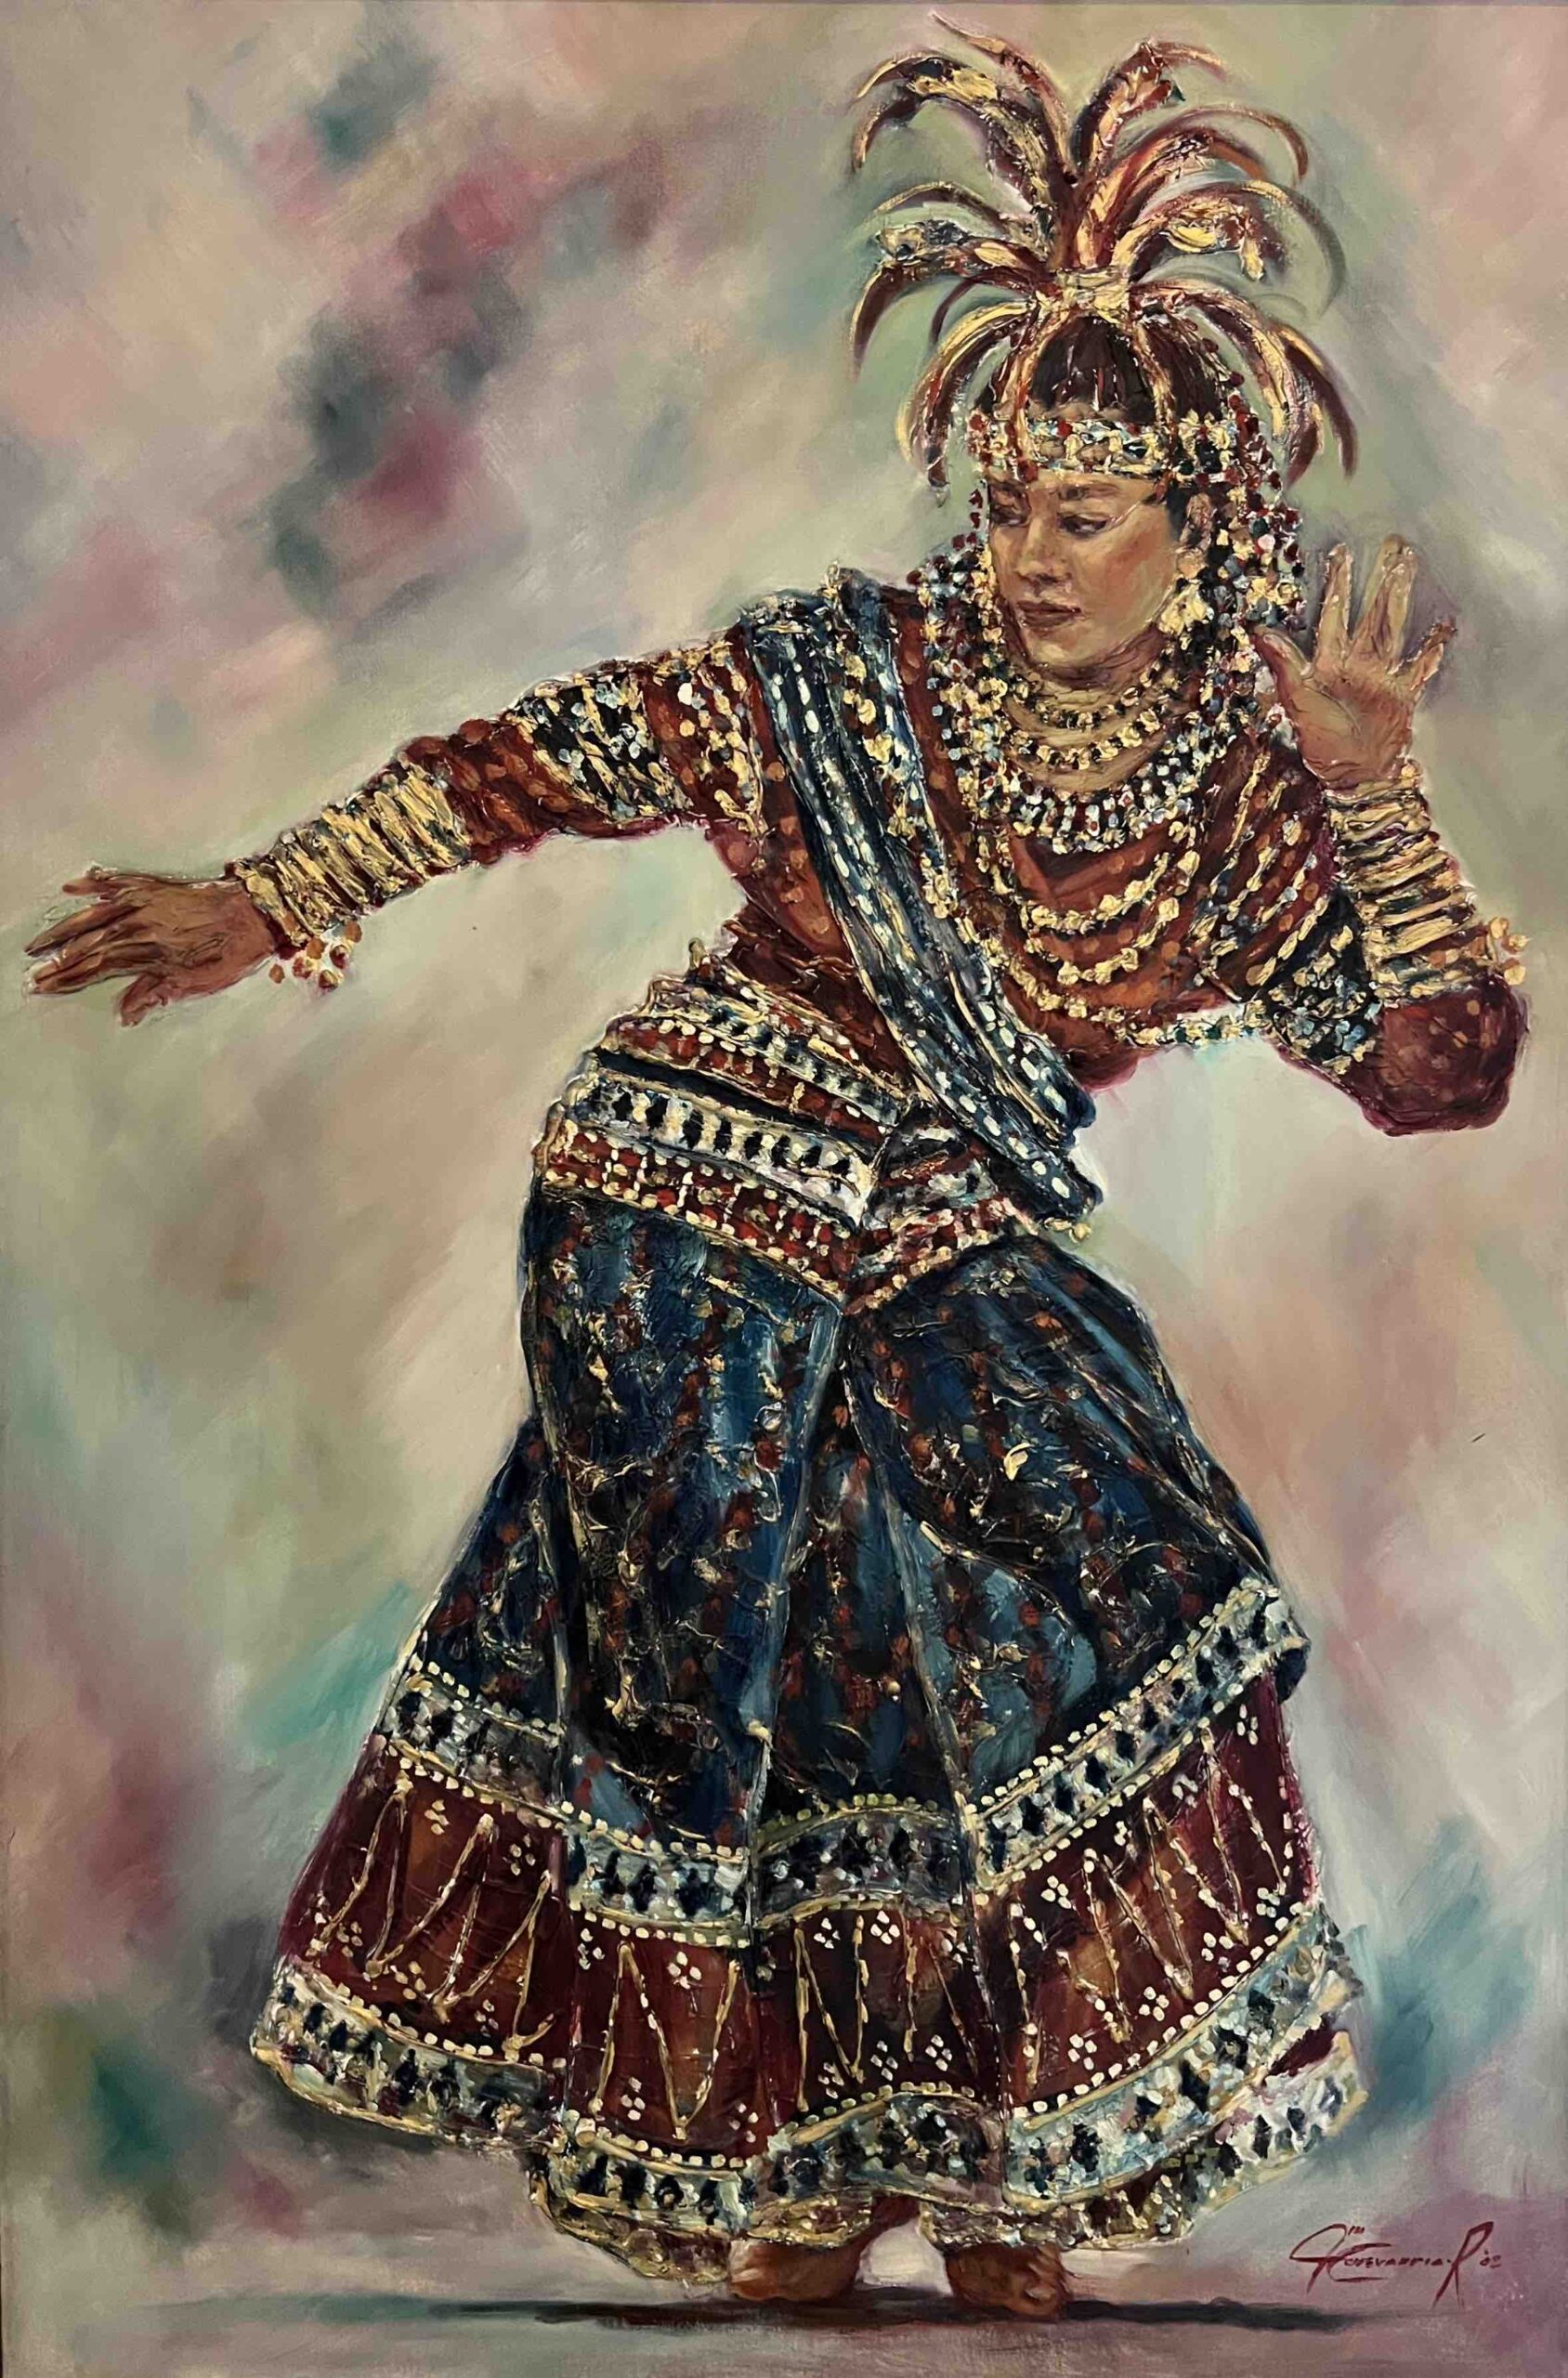 Isabel Echevarria's "Manobo" (mixed media on canvas)